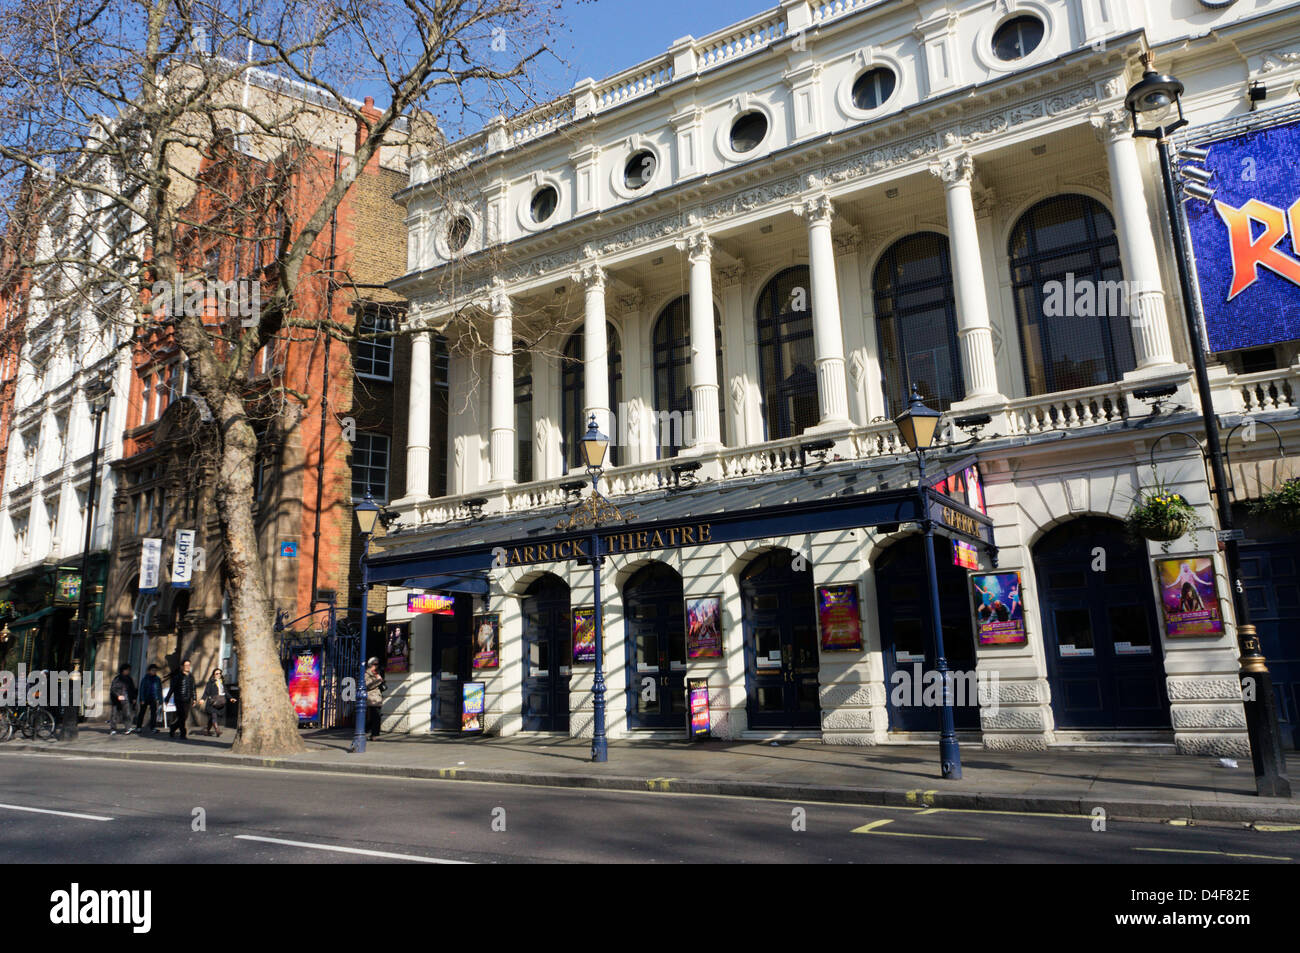 Garrick Theatre in Charing Cross Road in London. Stockfoto